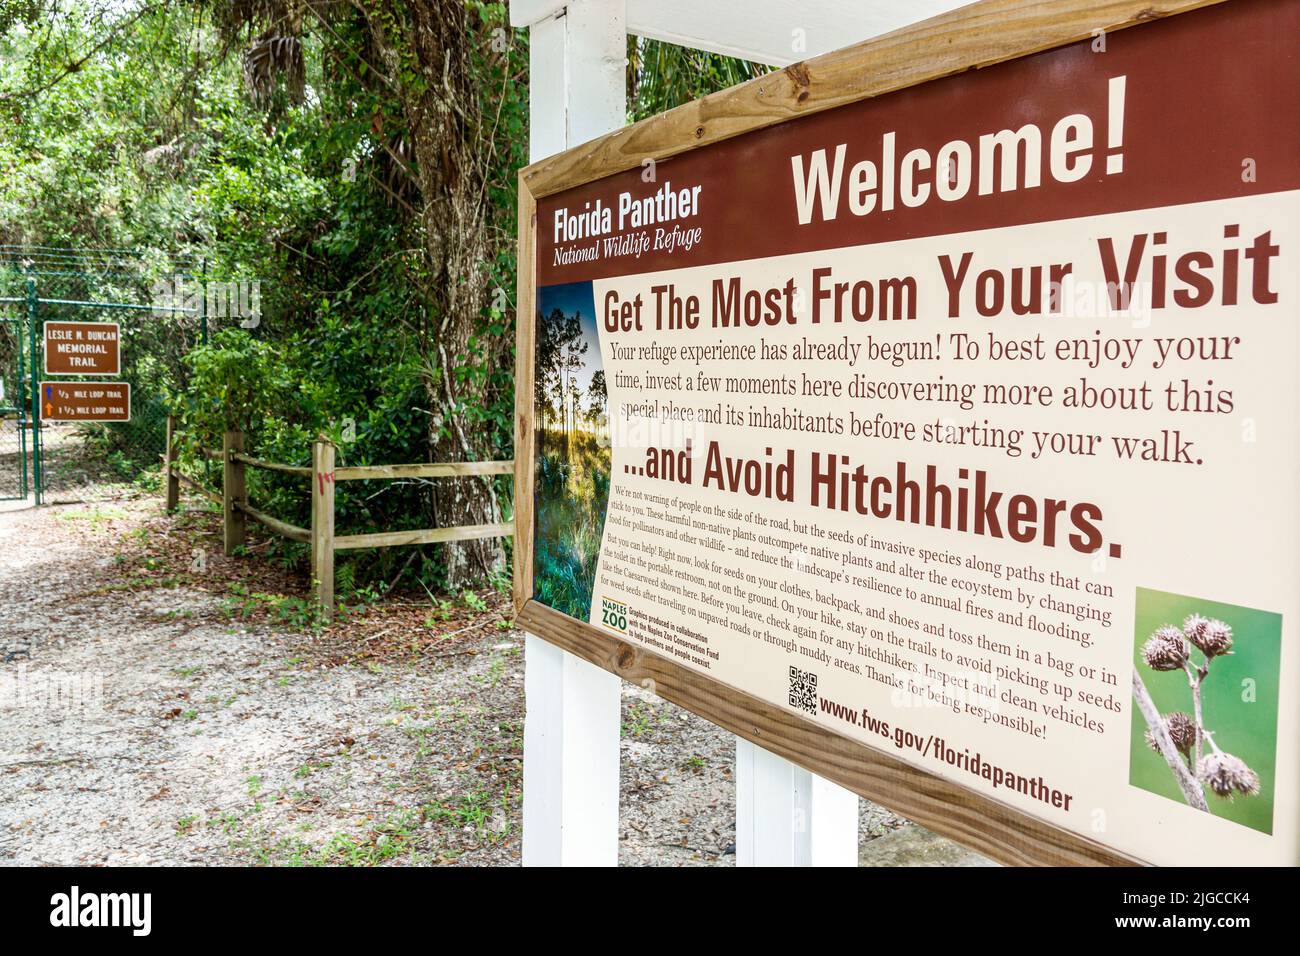 Naples Florida Everglades,Florida Panther National Wildlife Refuge Leslie M. Duncan Memorial Trail gate gated Stock Photo